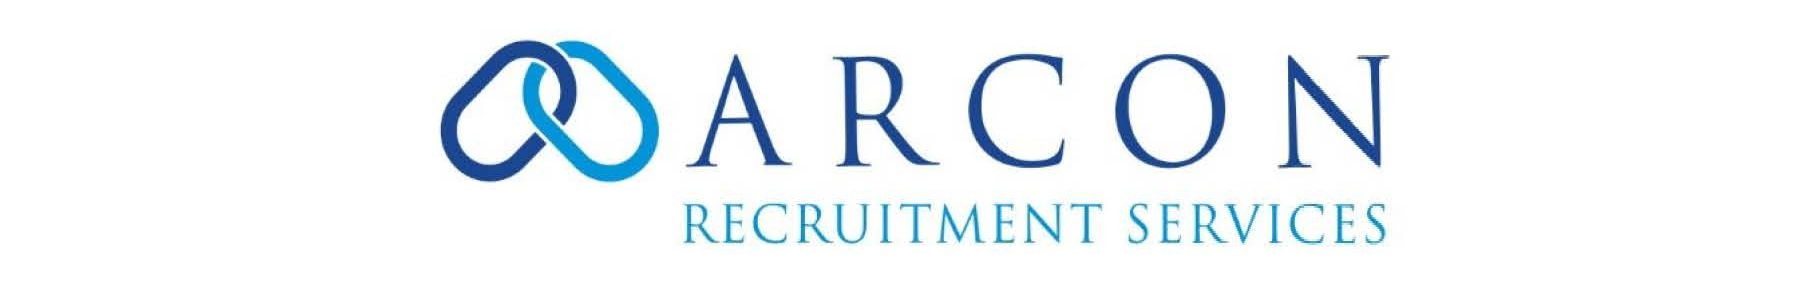 arcon recruitment background